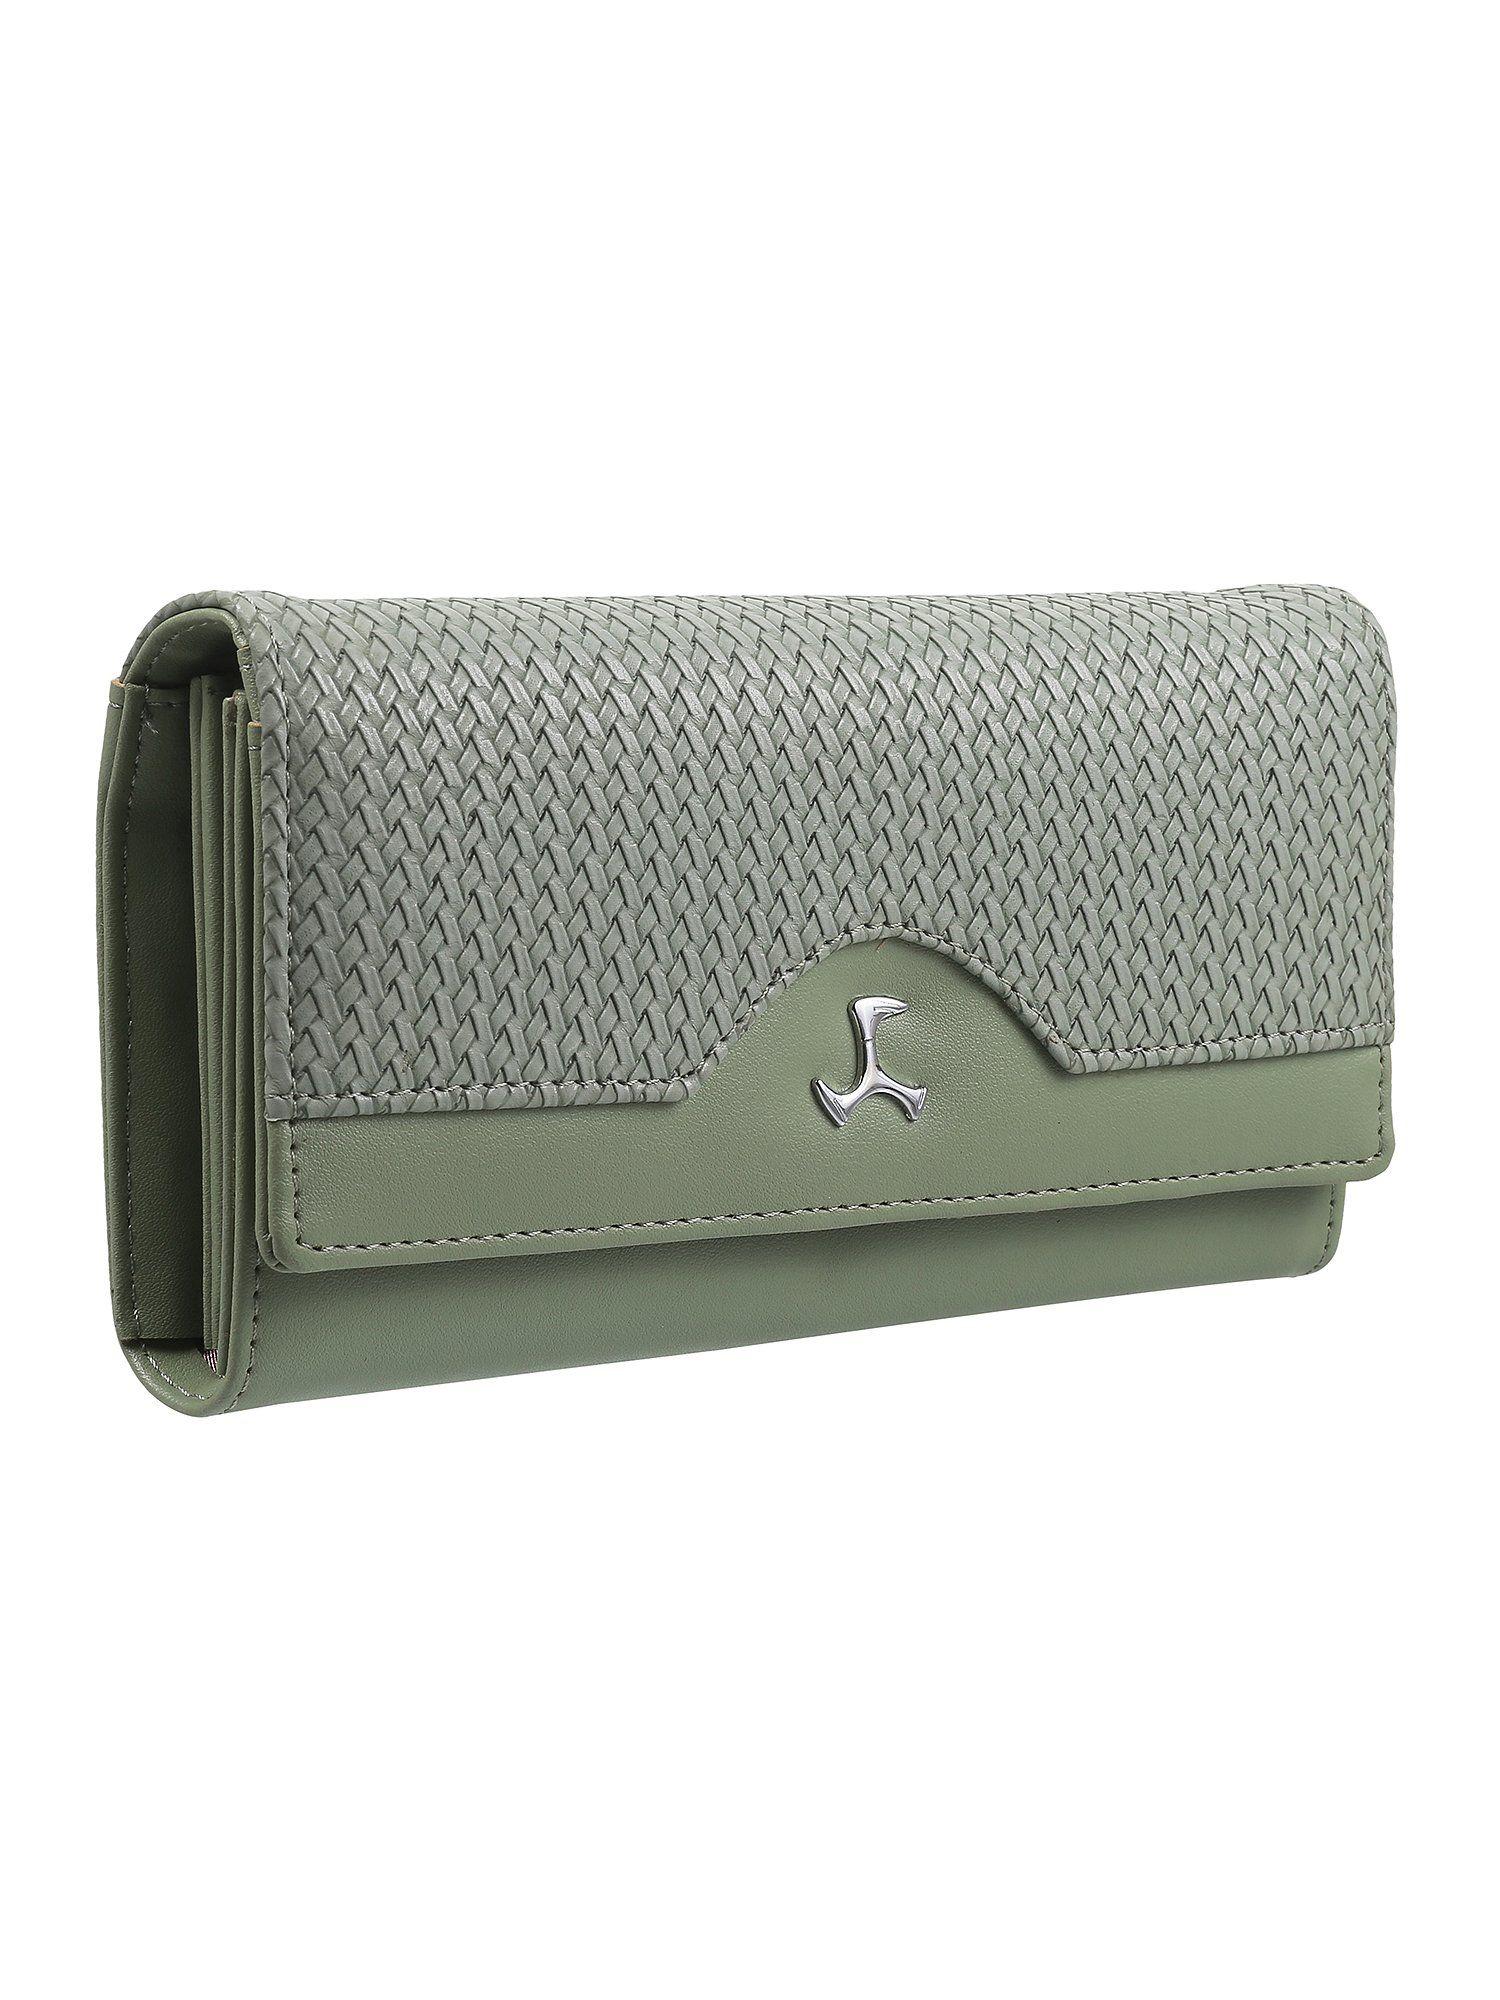 textured green wallet